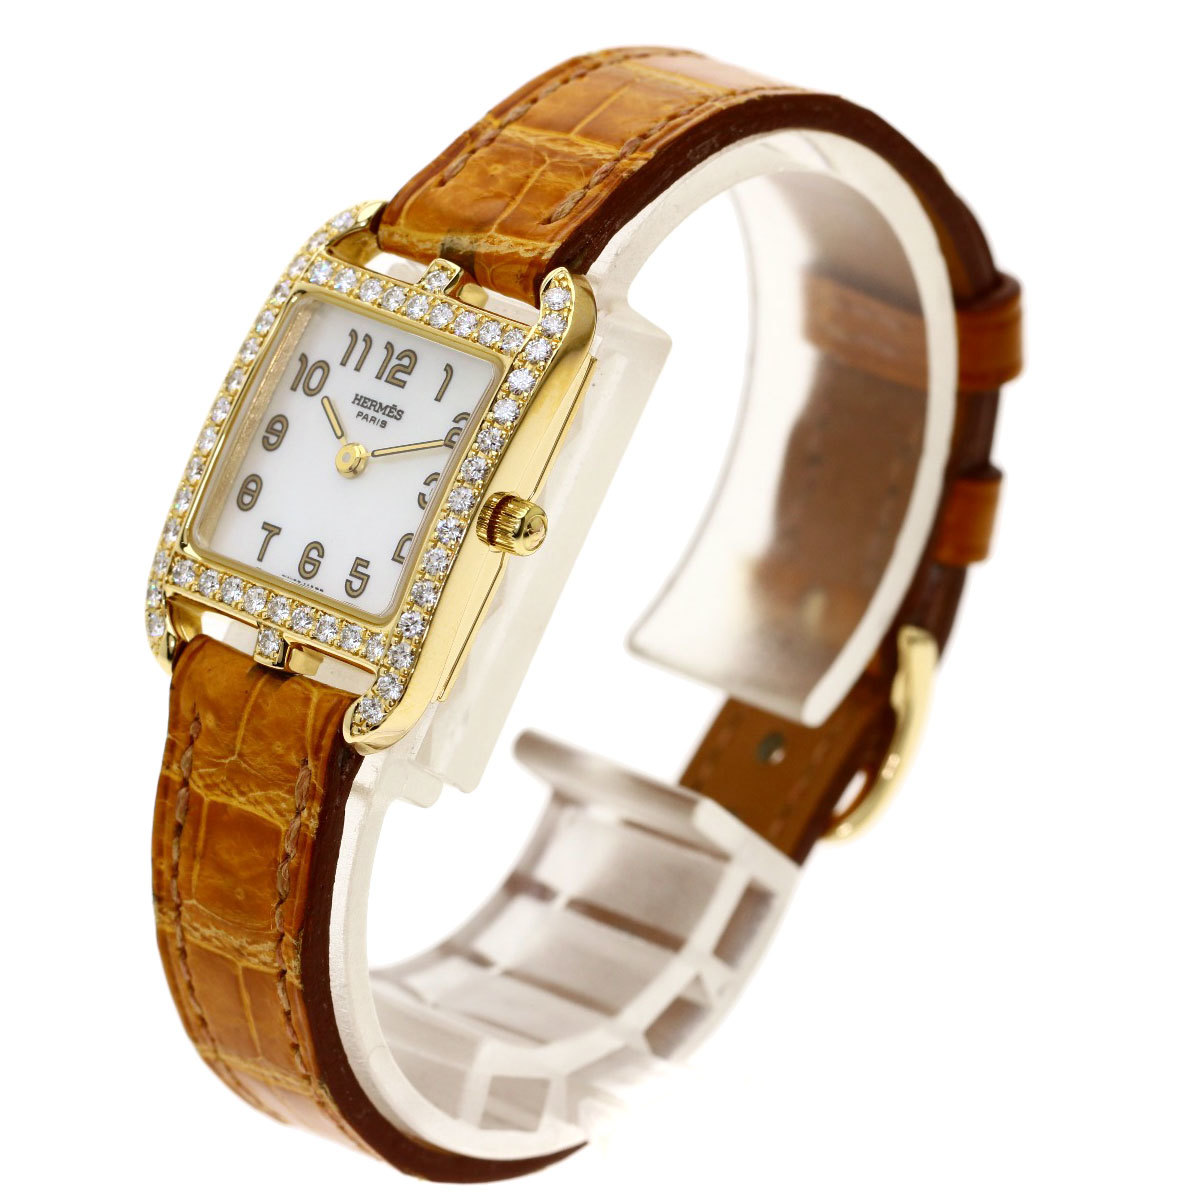 HERMES エルメス CC1.187 ケープコッド ダイヤモンドベゼル 腕時計 K18イエローゴールド 革 ダイヤモンド レディース 中古_画像2